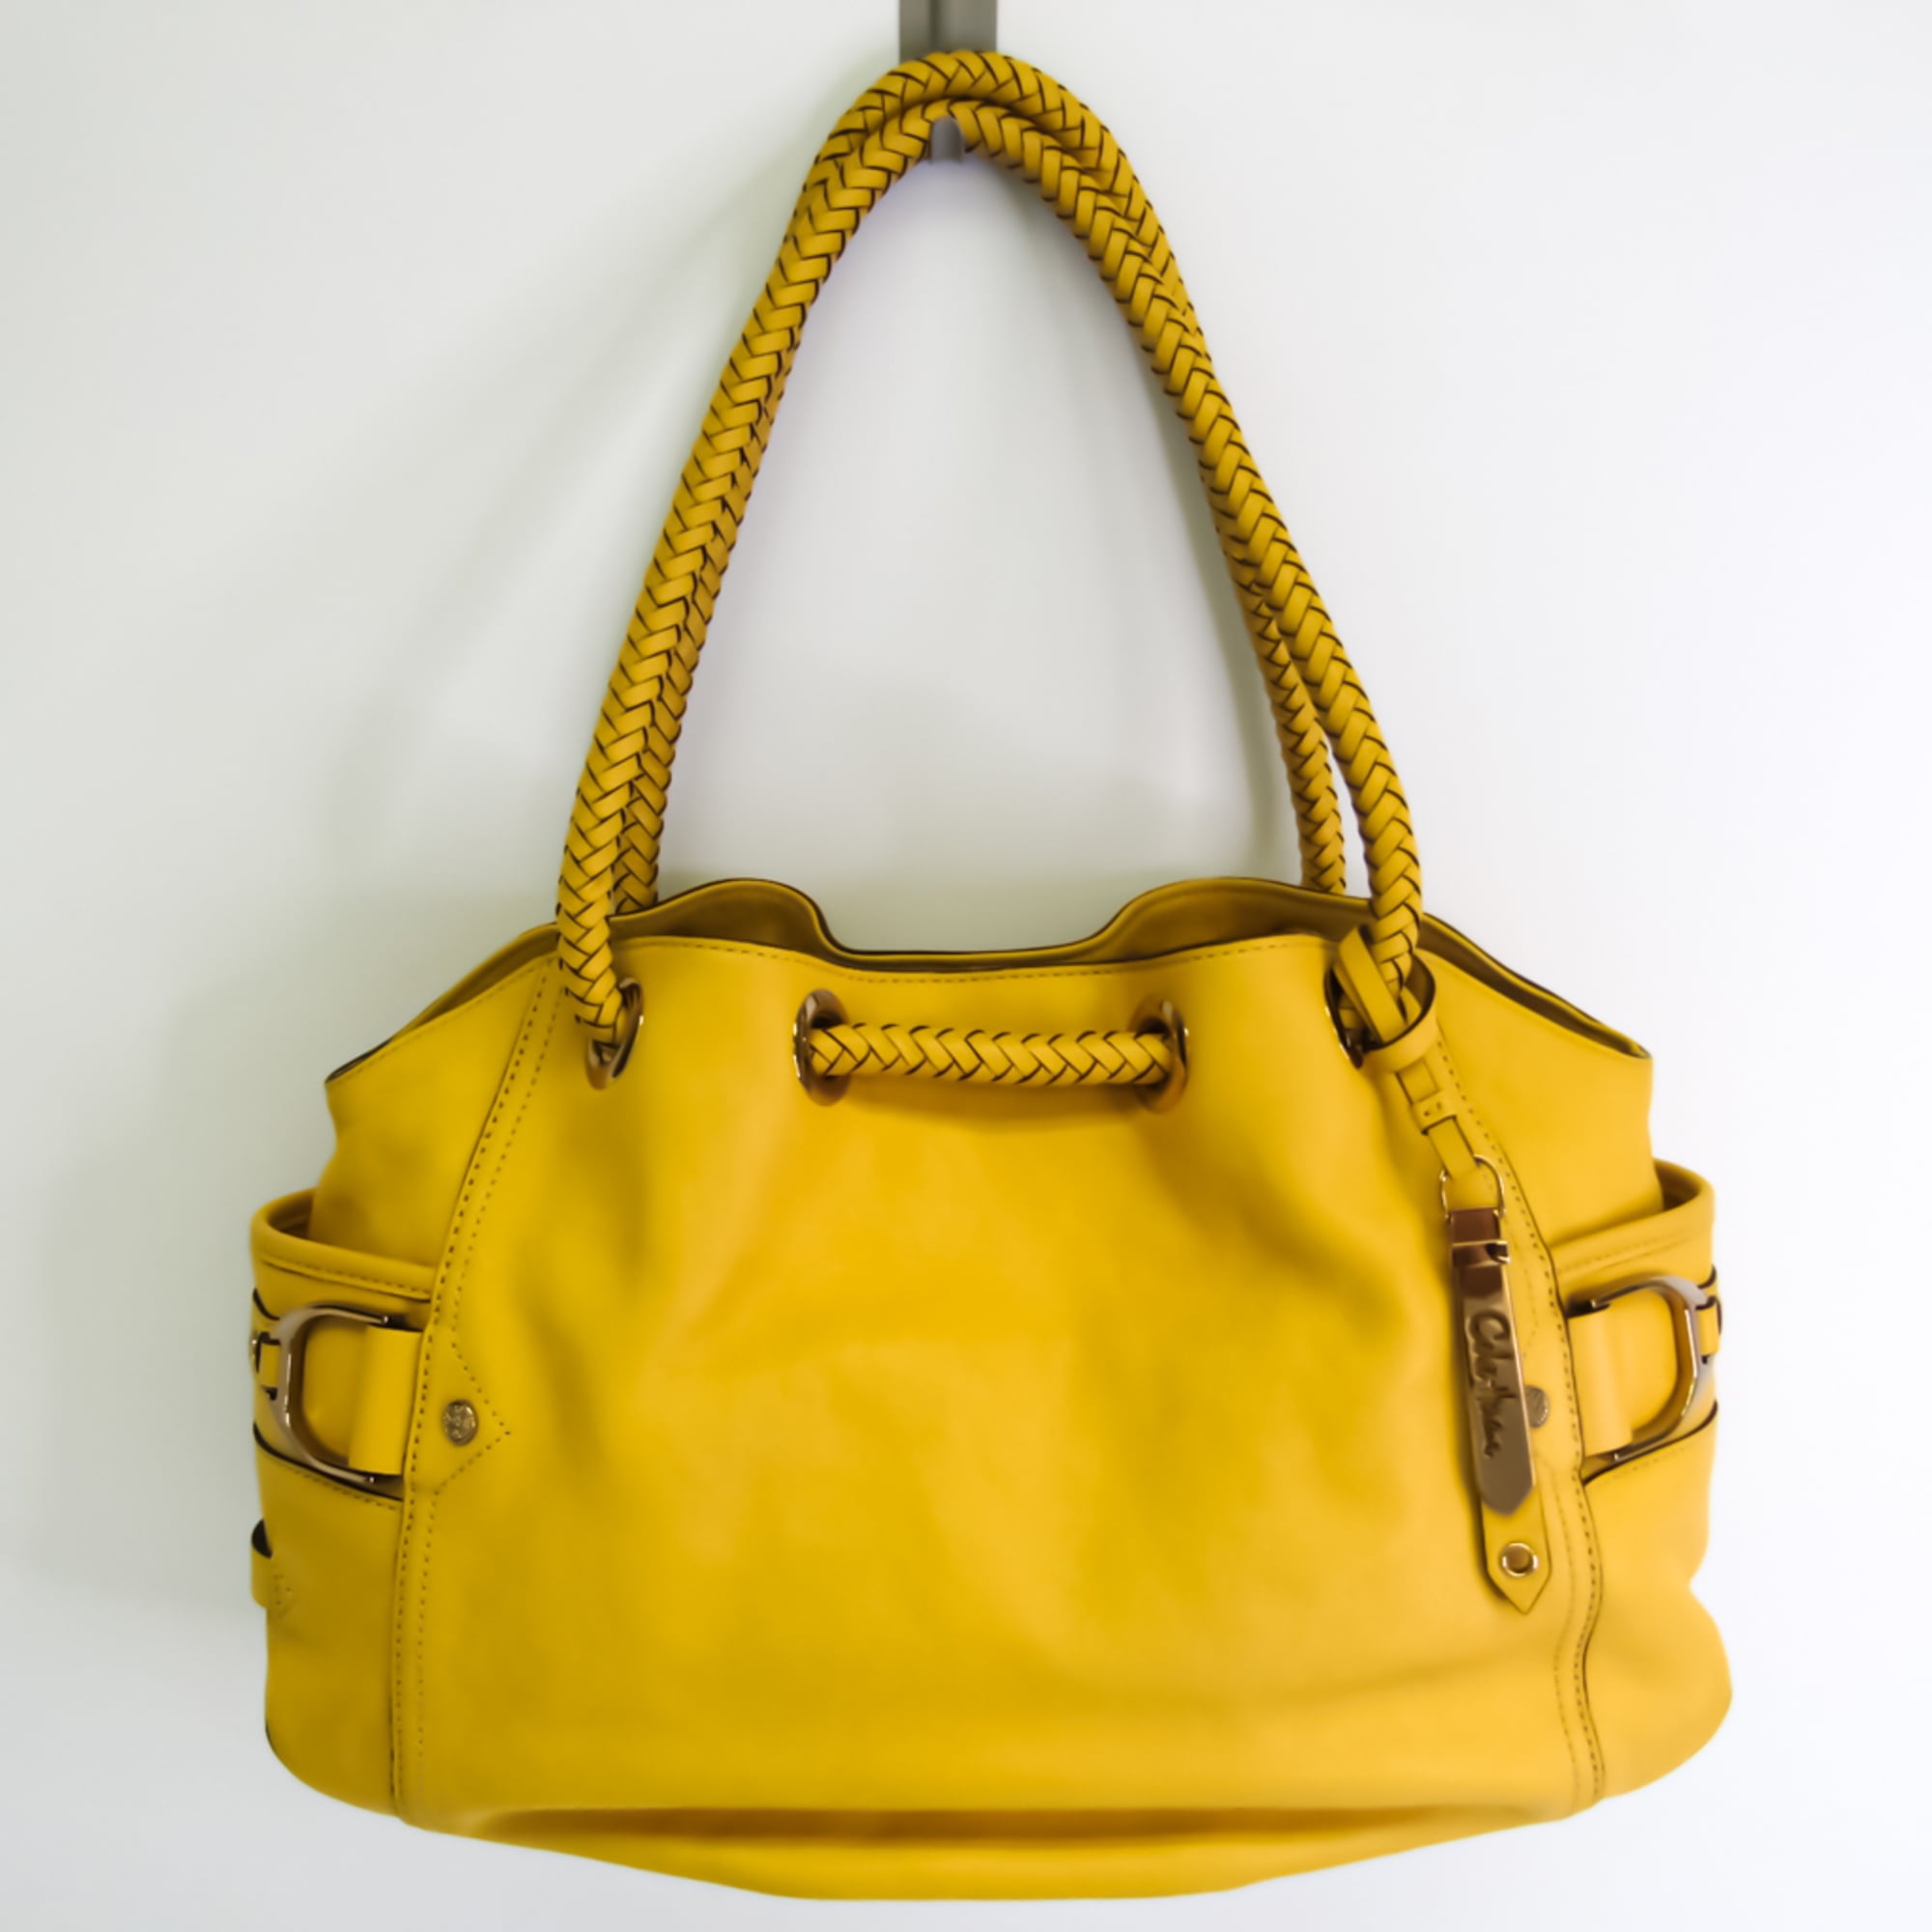 Chloé - Authenticated C Handbag - Leather Navy Plain for Women, Never Worn